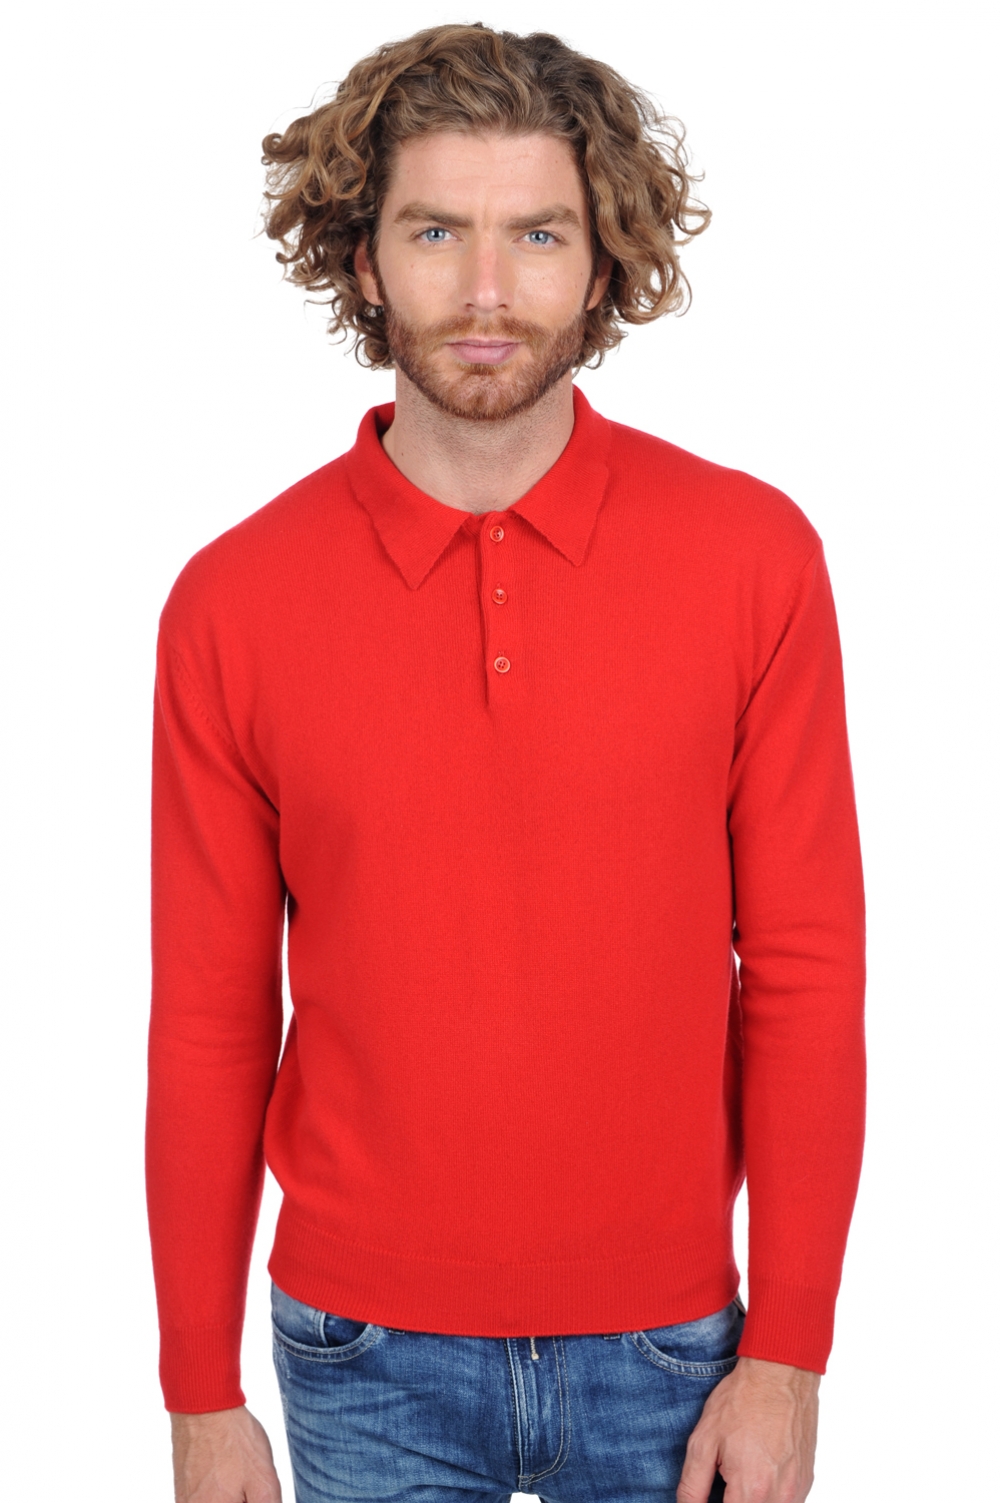 Cachemire pull homme alexandre premium rouge xl